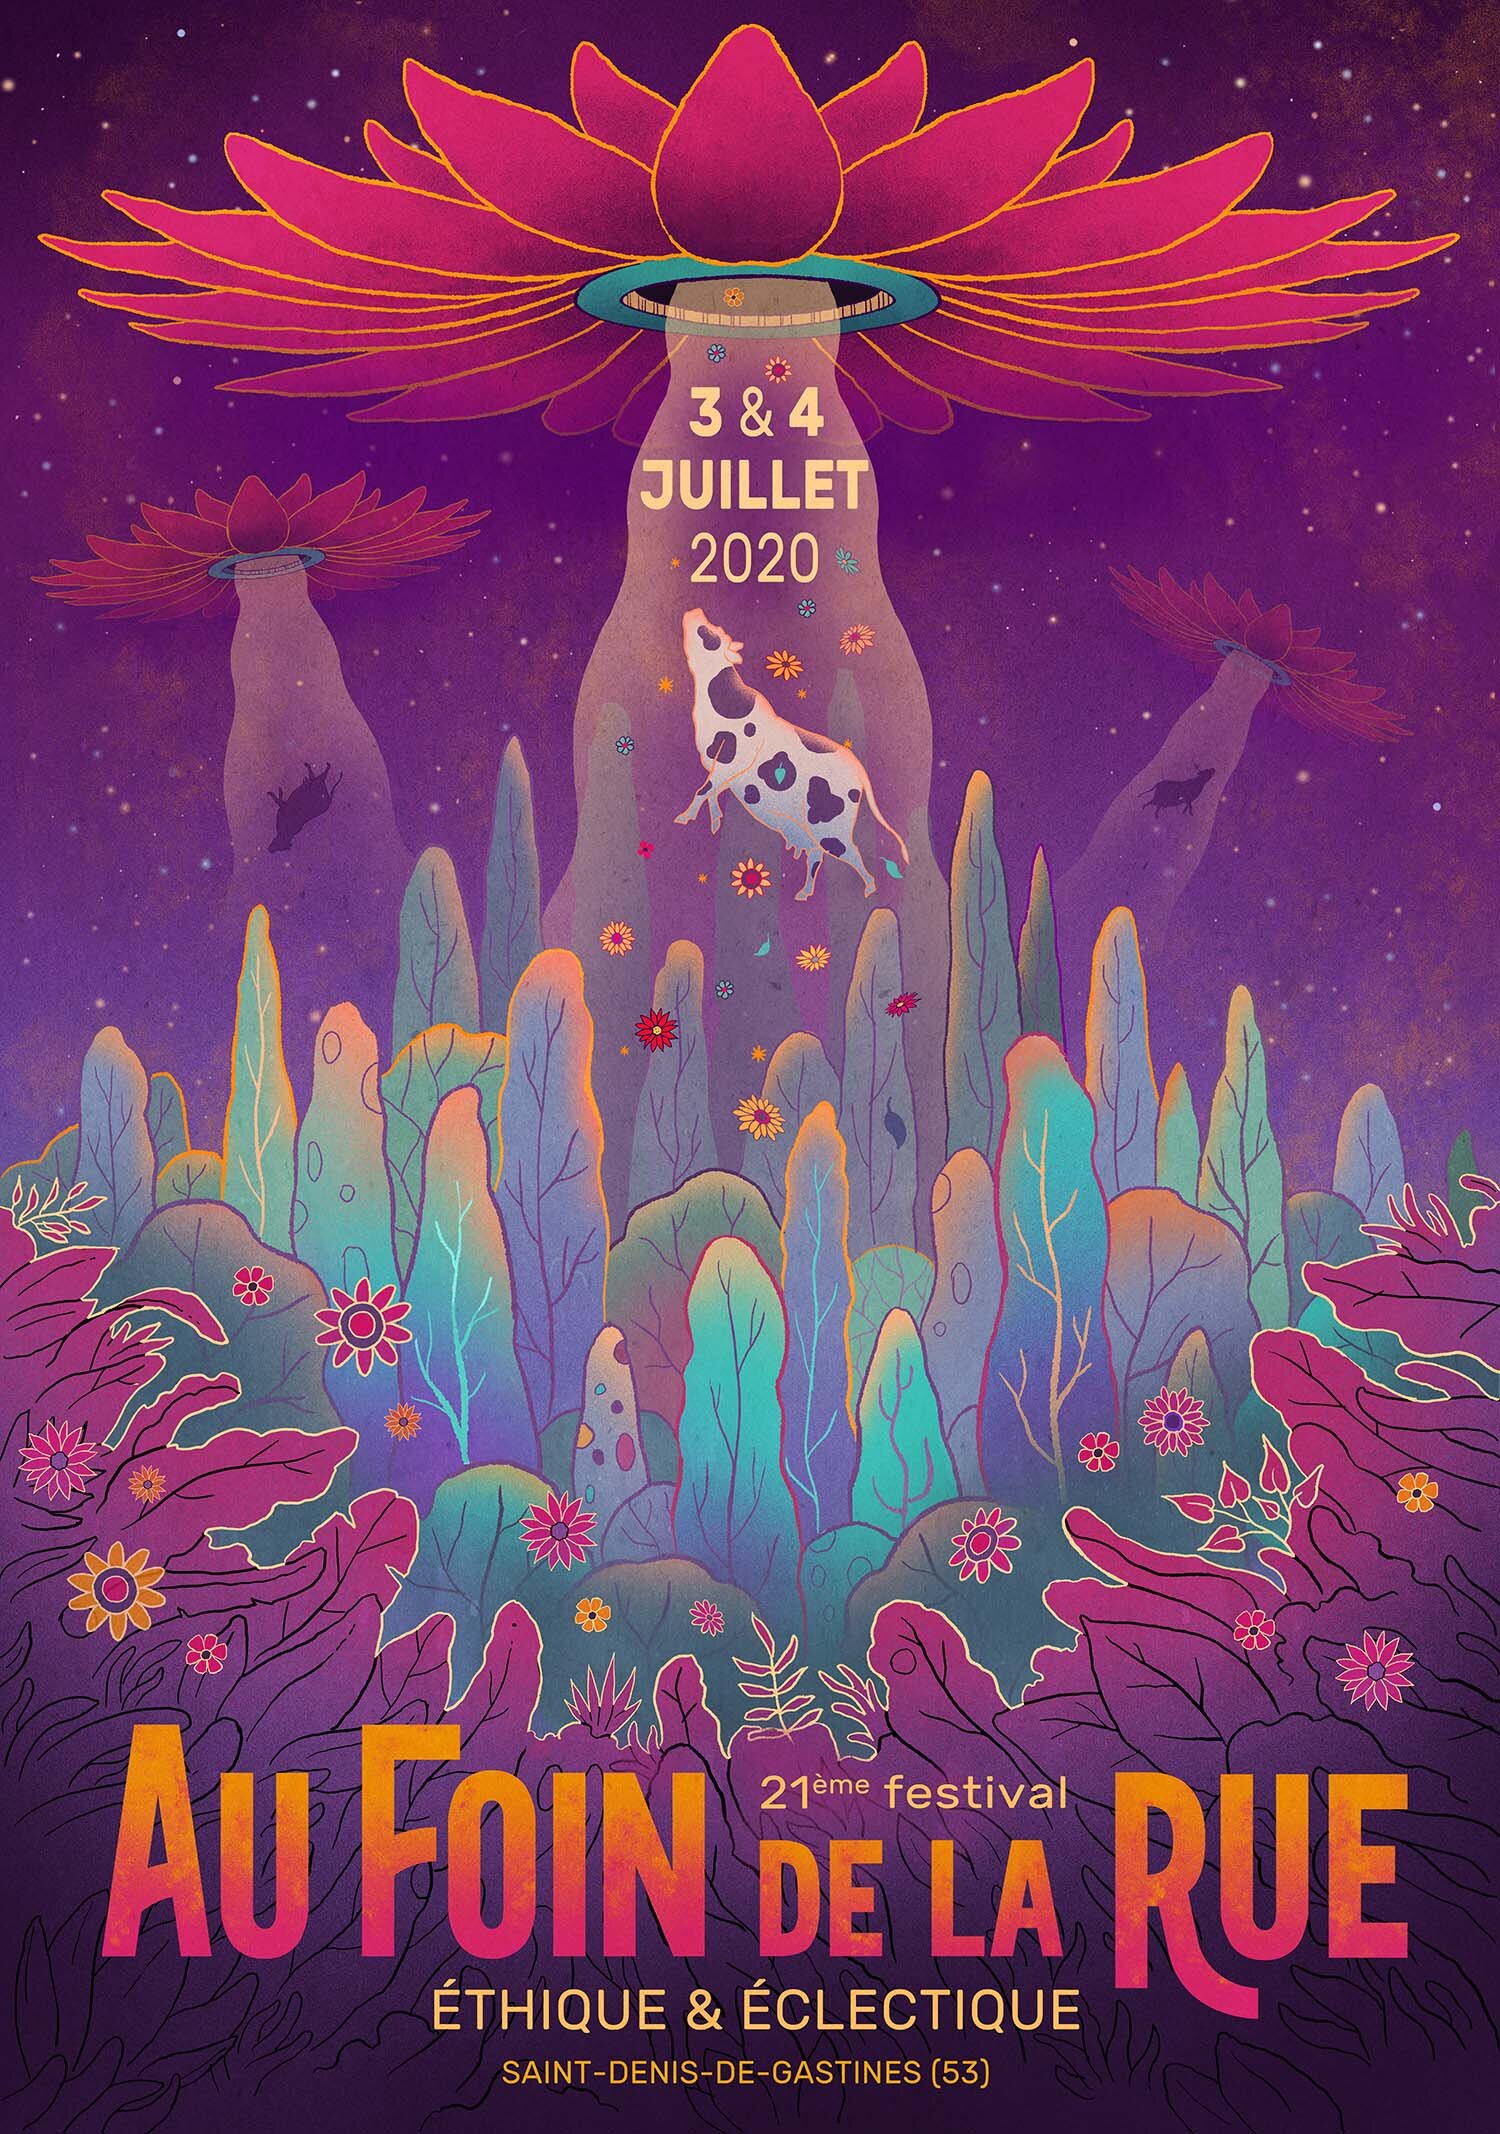 antoine-dore-music-festival-affiche-poster-illustration-psychedelic.jpg